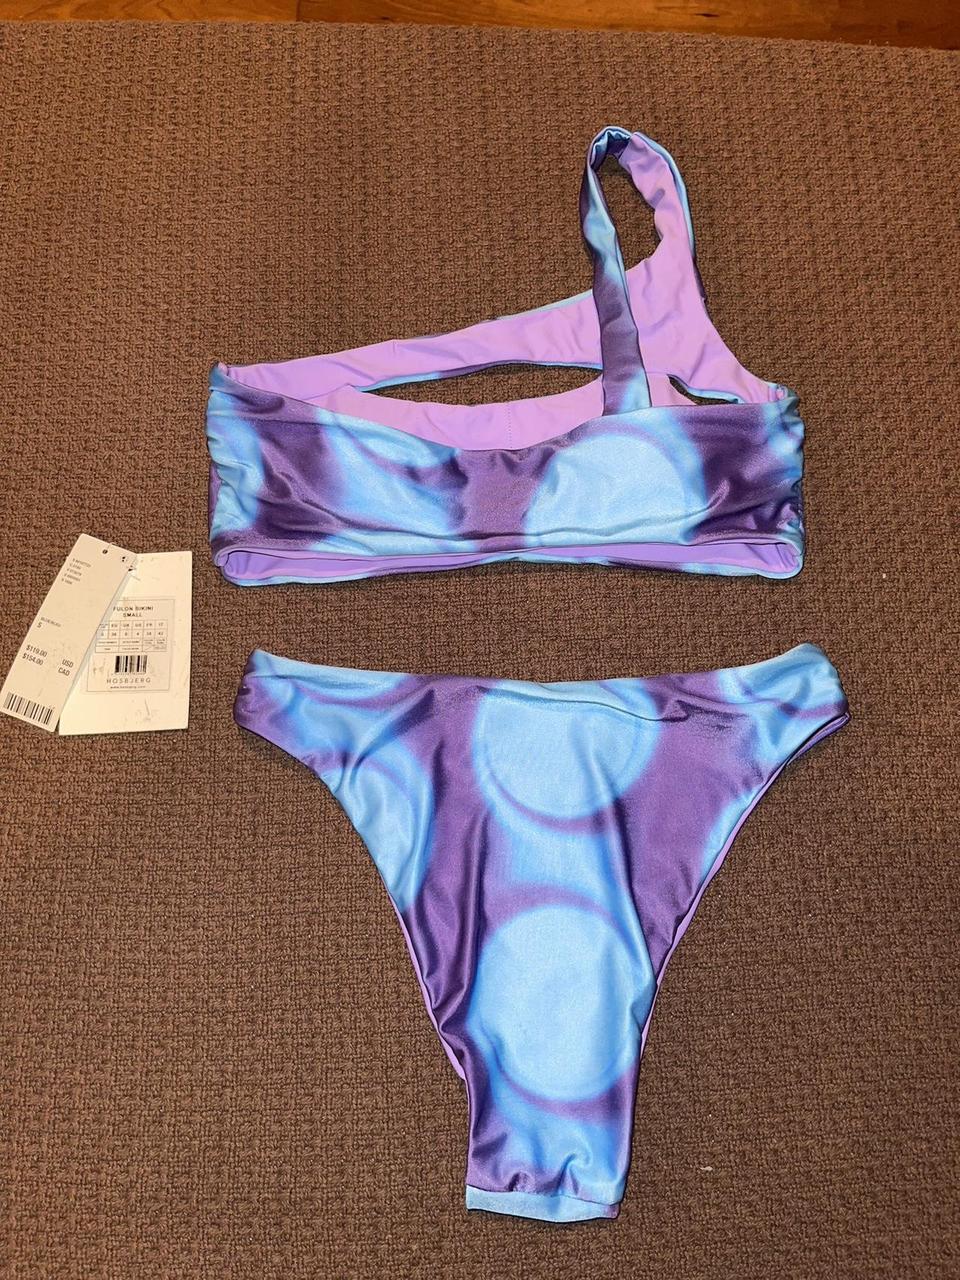 Hosbjerg Women's Blue and Purple Swimsuit-one-piece (2)